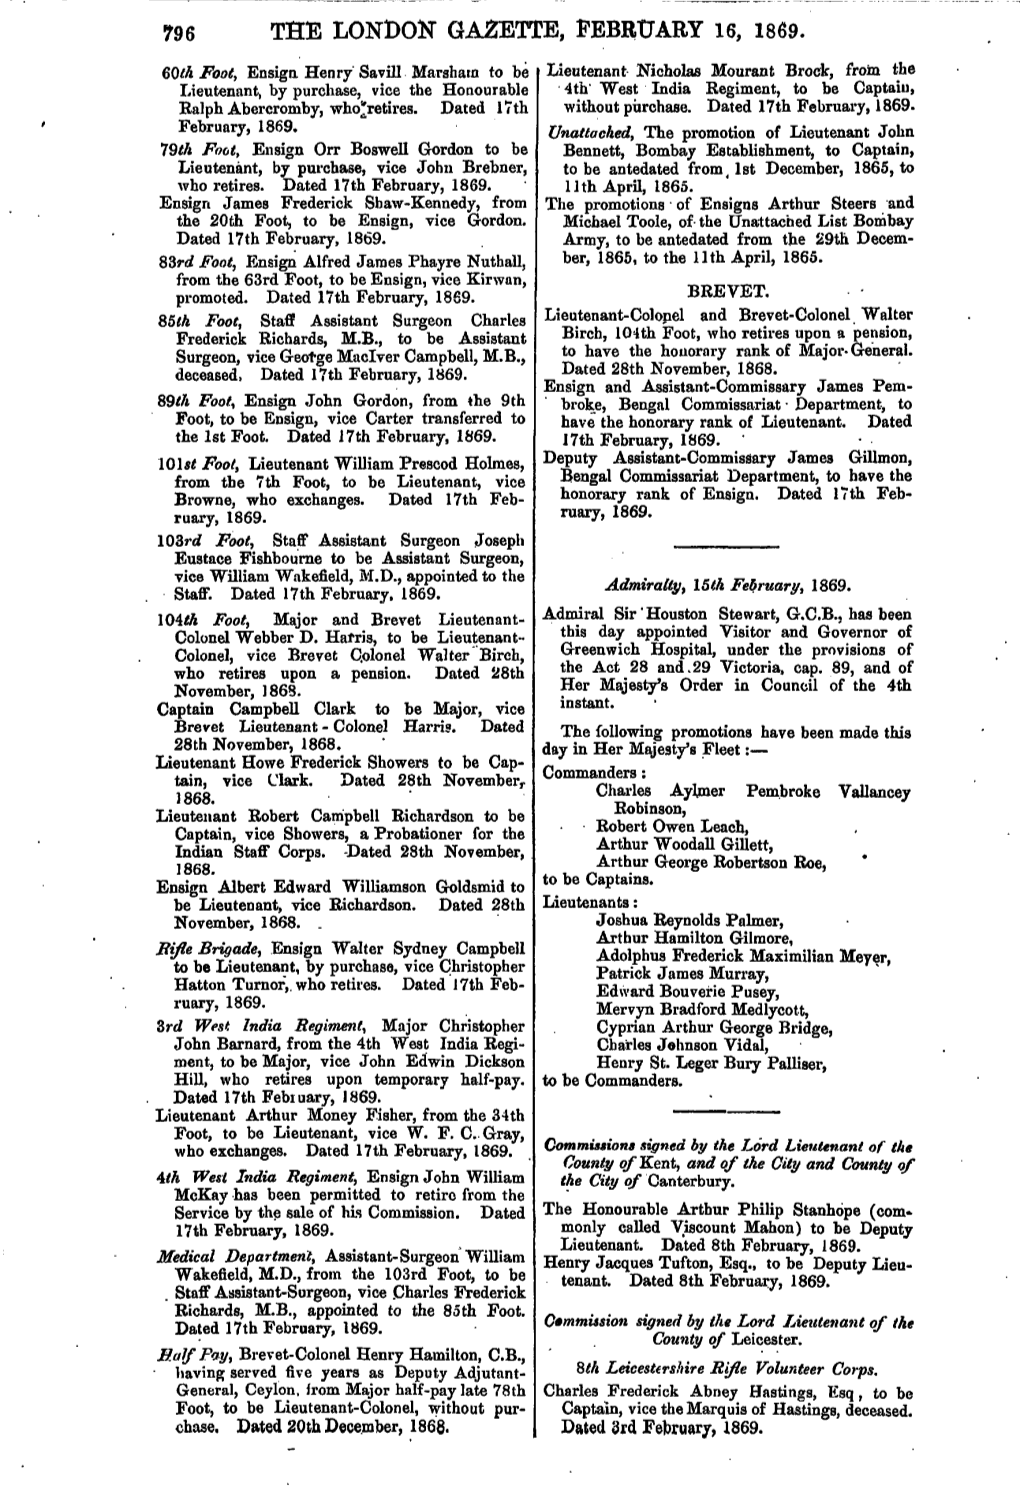 The London Gazette, February 16, 1869